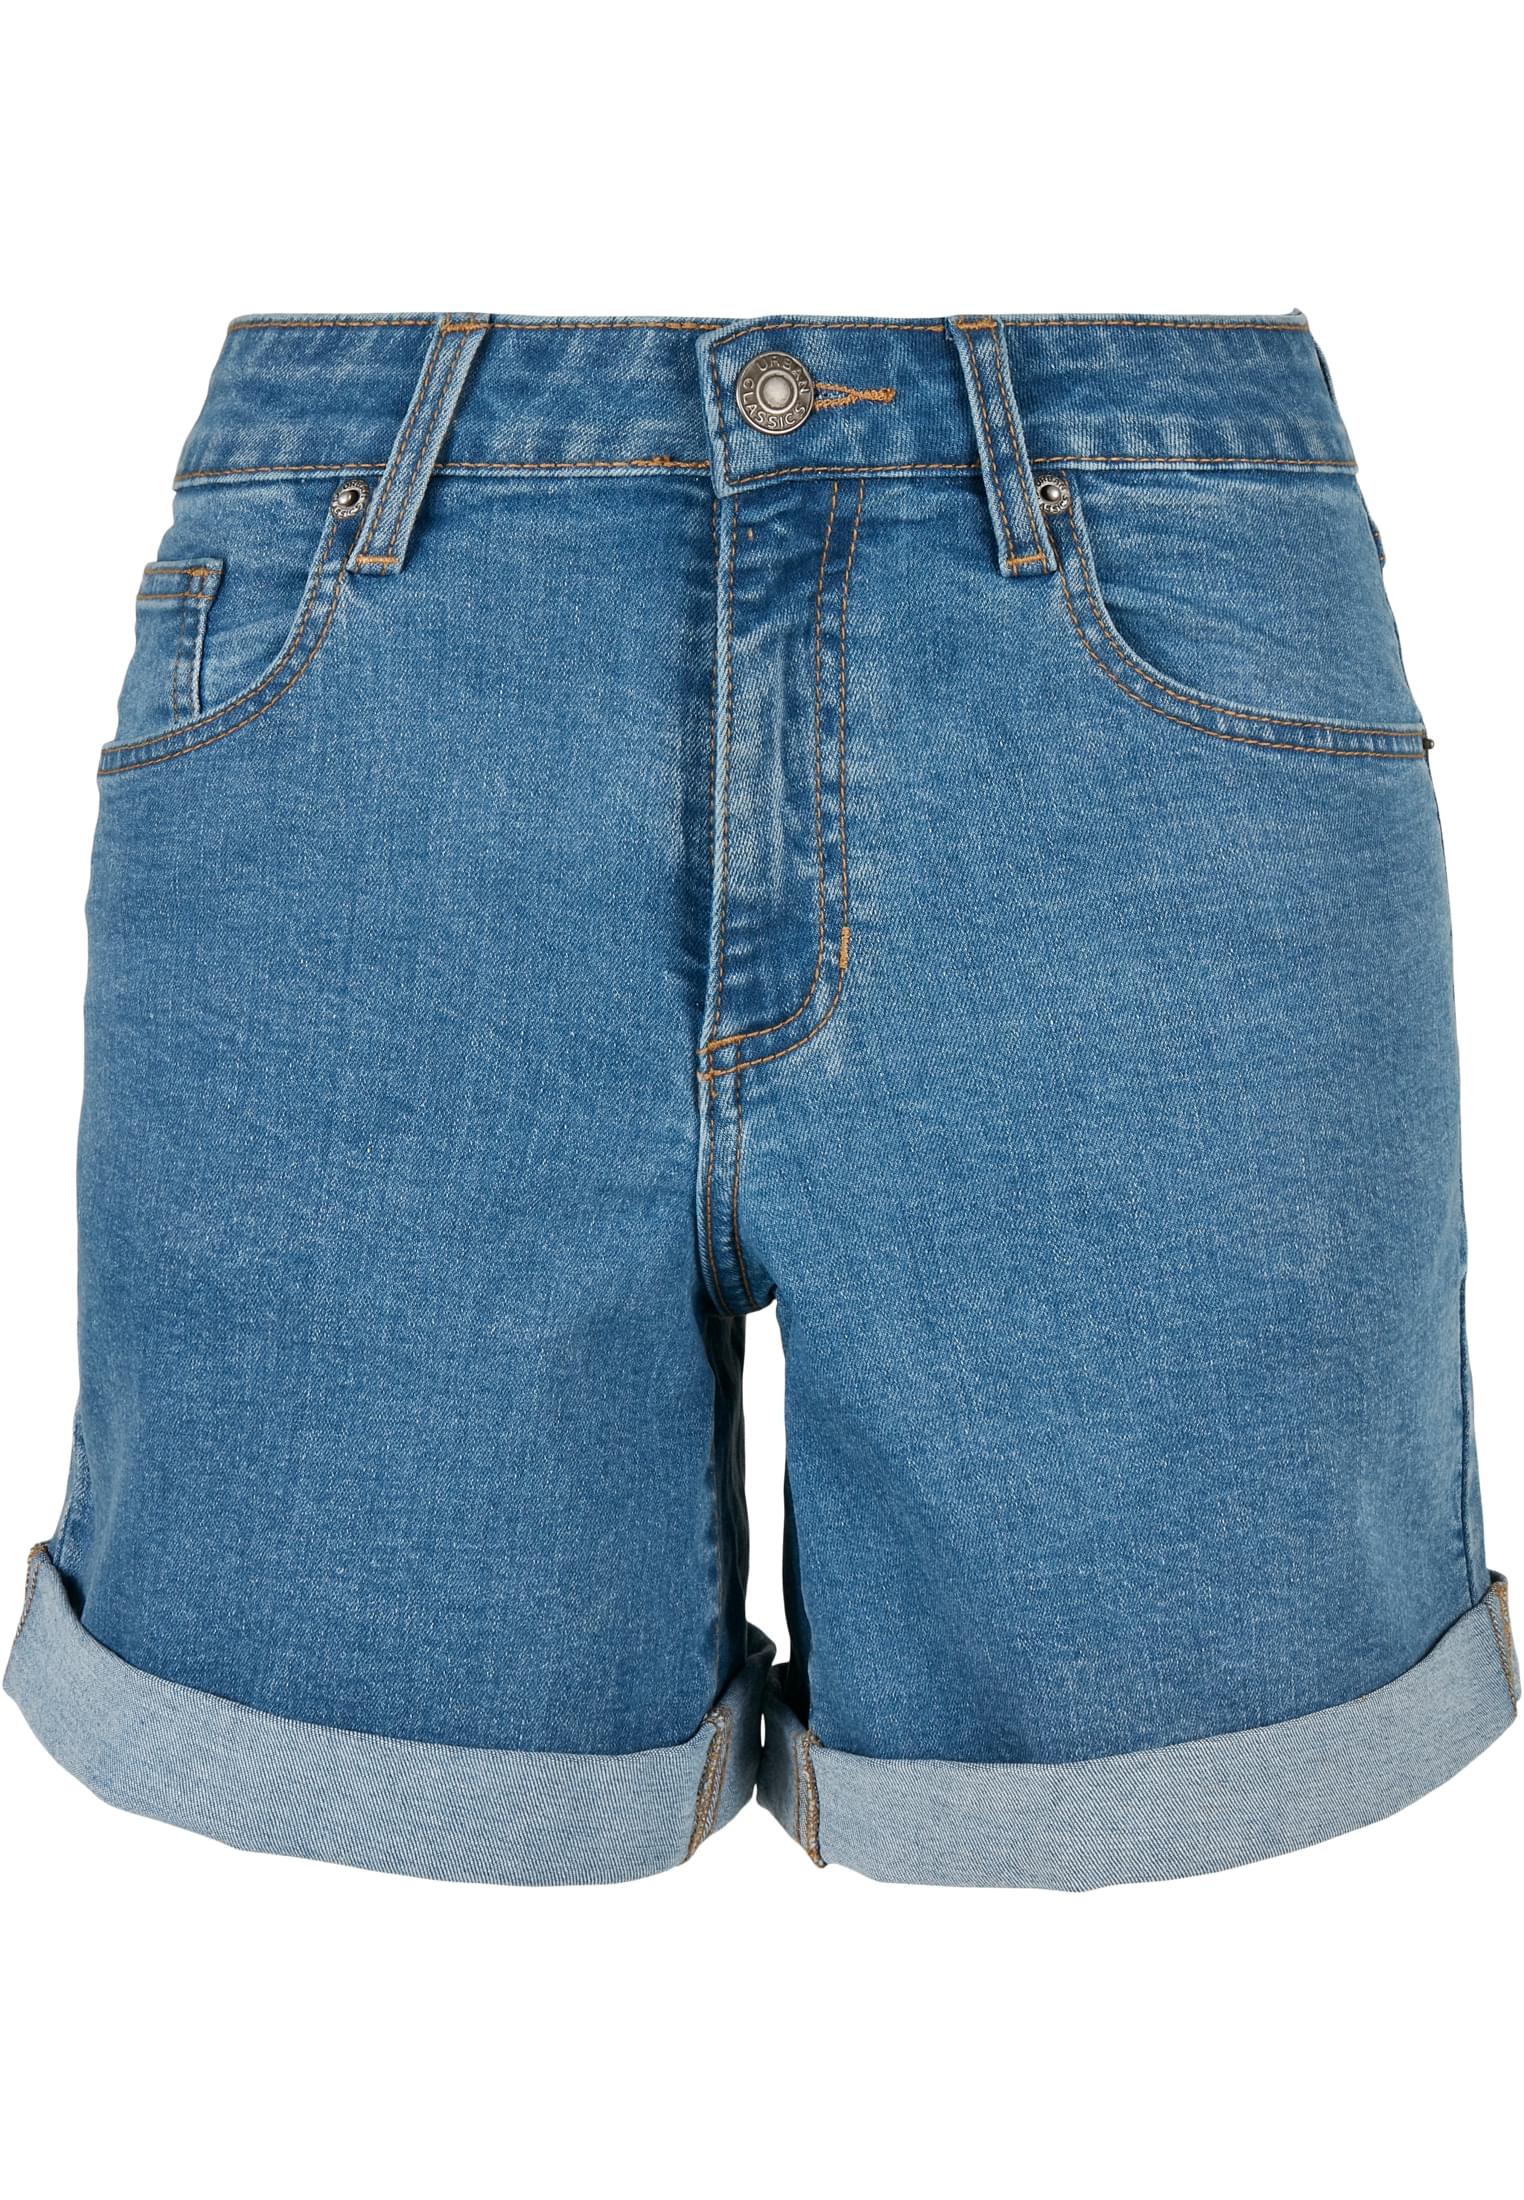 Frauen Ladies Organic Stretch Denim 5 Pocket Shorts in Farbe clearblue washed